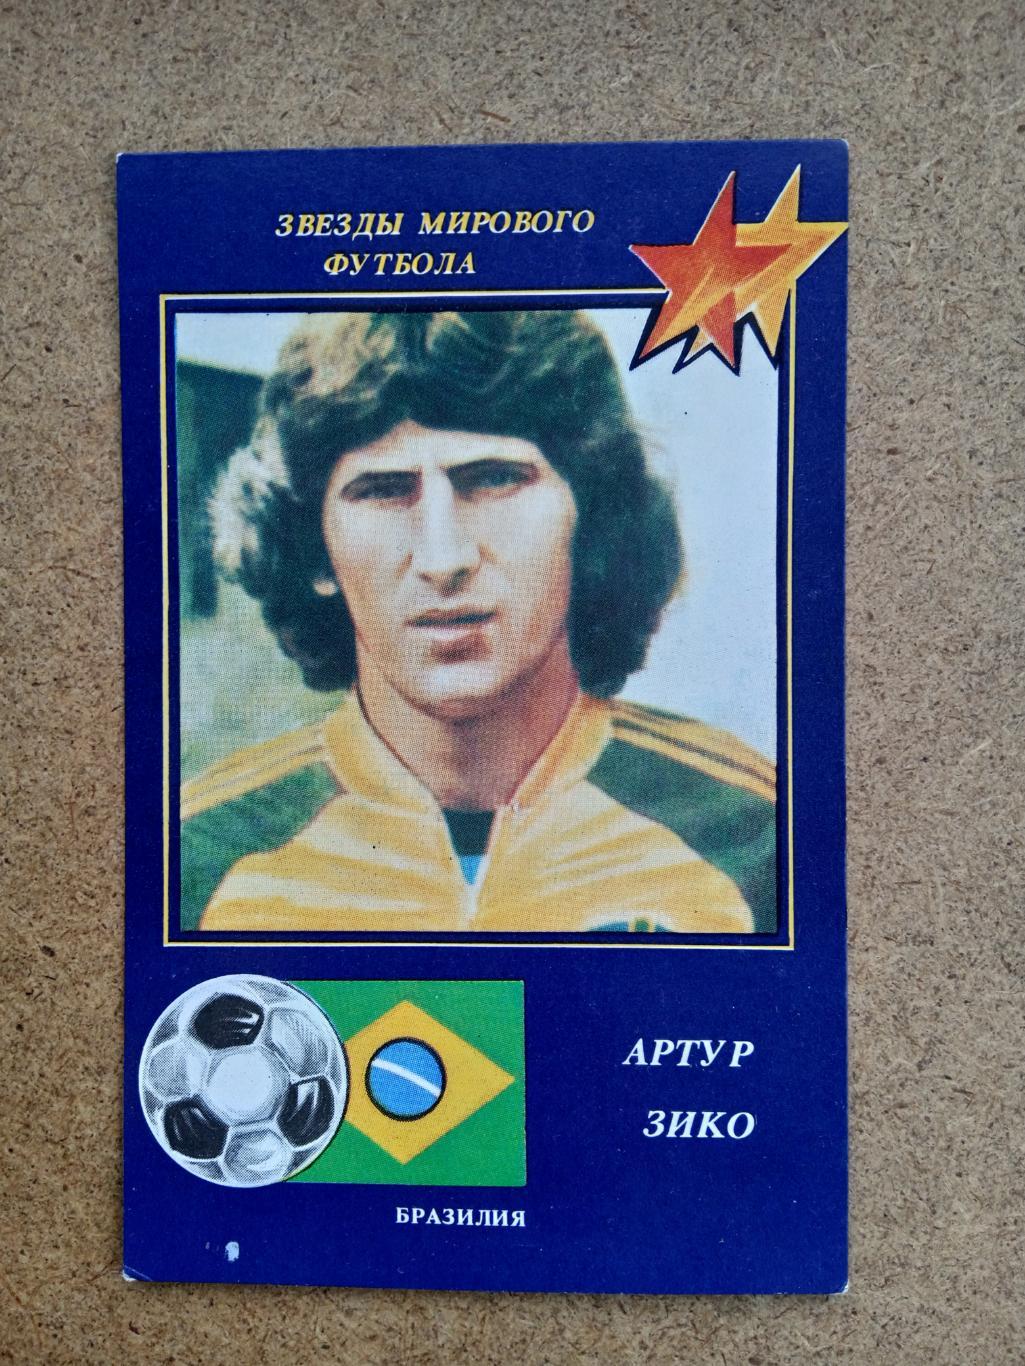 футбол-1991.А.Зико(Бразилия)